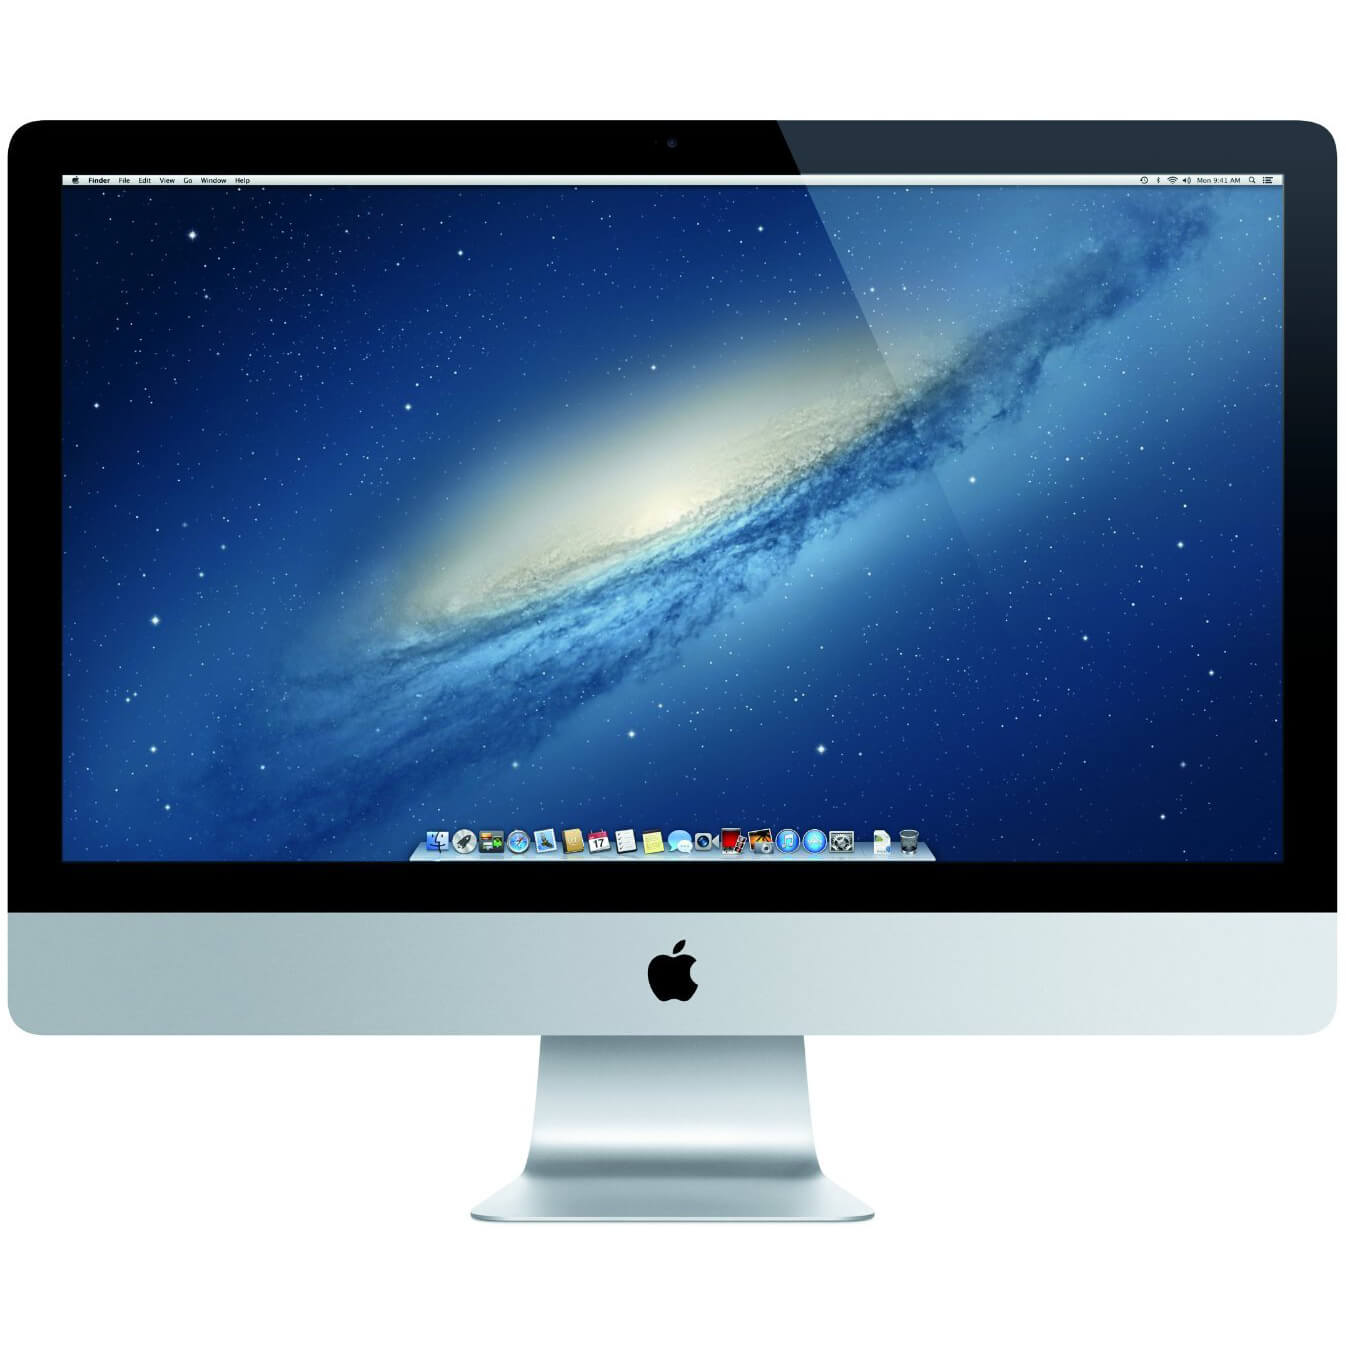  Sistem Desktop PC All-in-One Apple iMac Retina 5k, Intel Core i5, 8GB DDR3, HDD 1 TB, AMD Radeon R9 M380 2GB, Mac OS X 